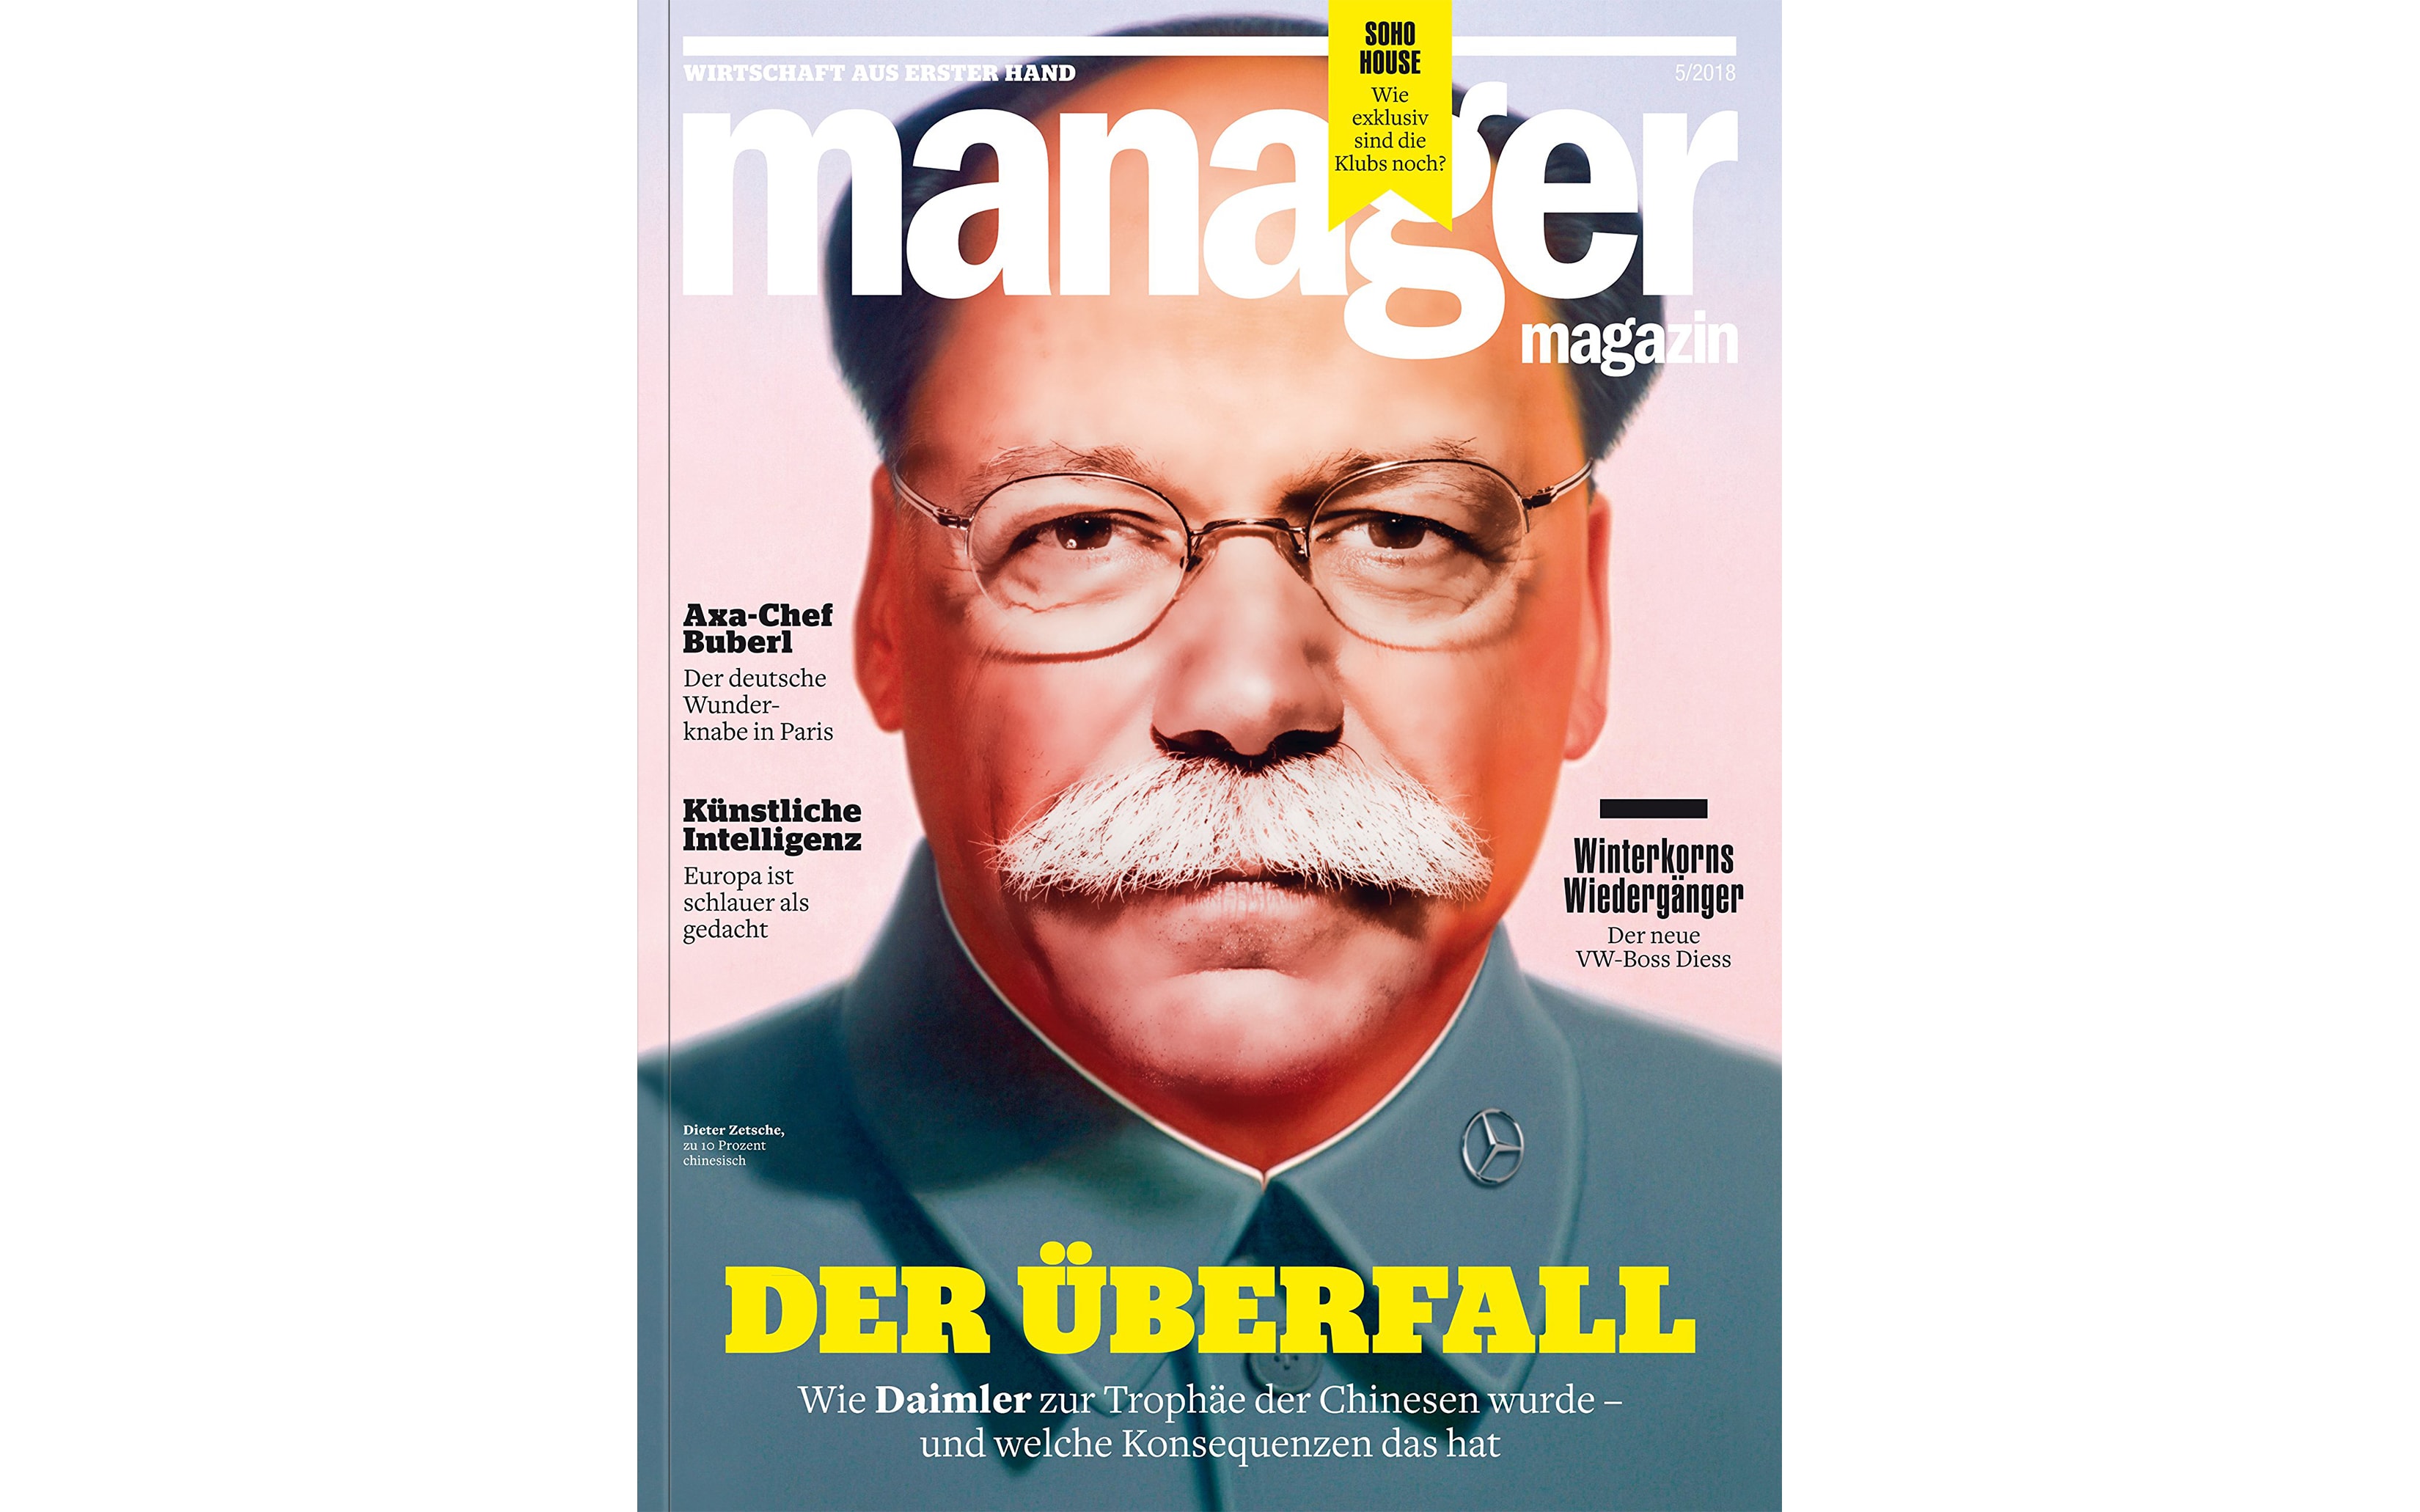 Bureau Johannes Erler – manager magazin